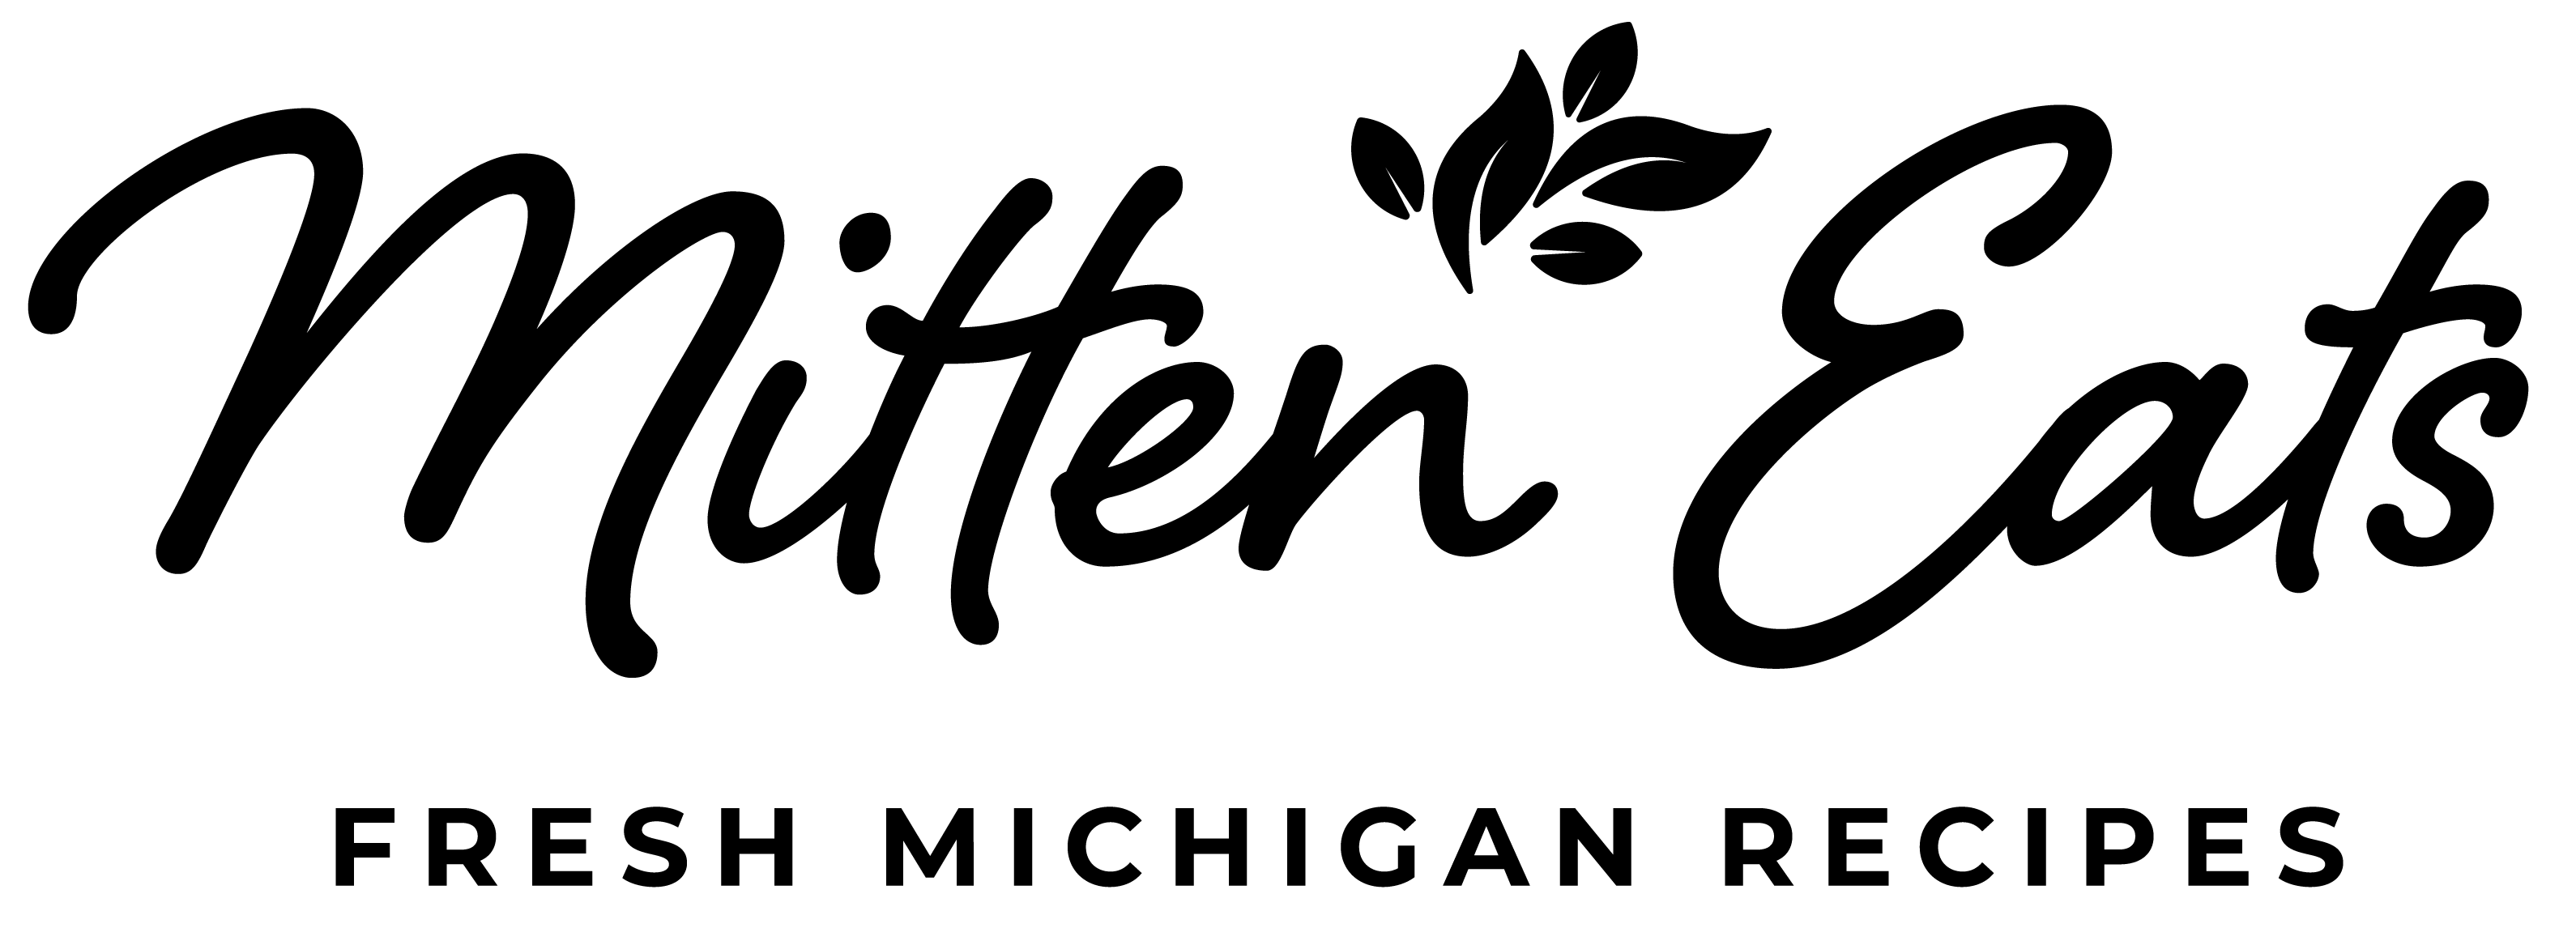 Mitten Eats black logo